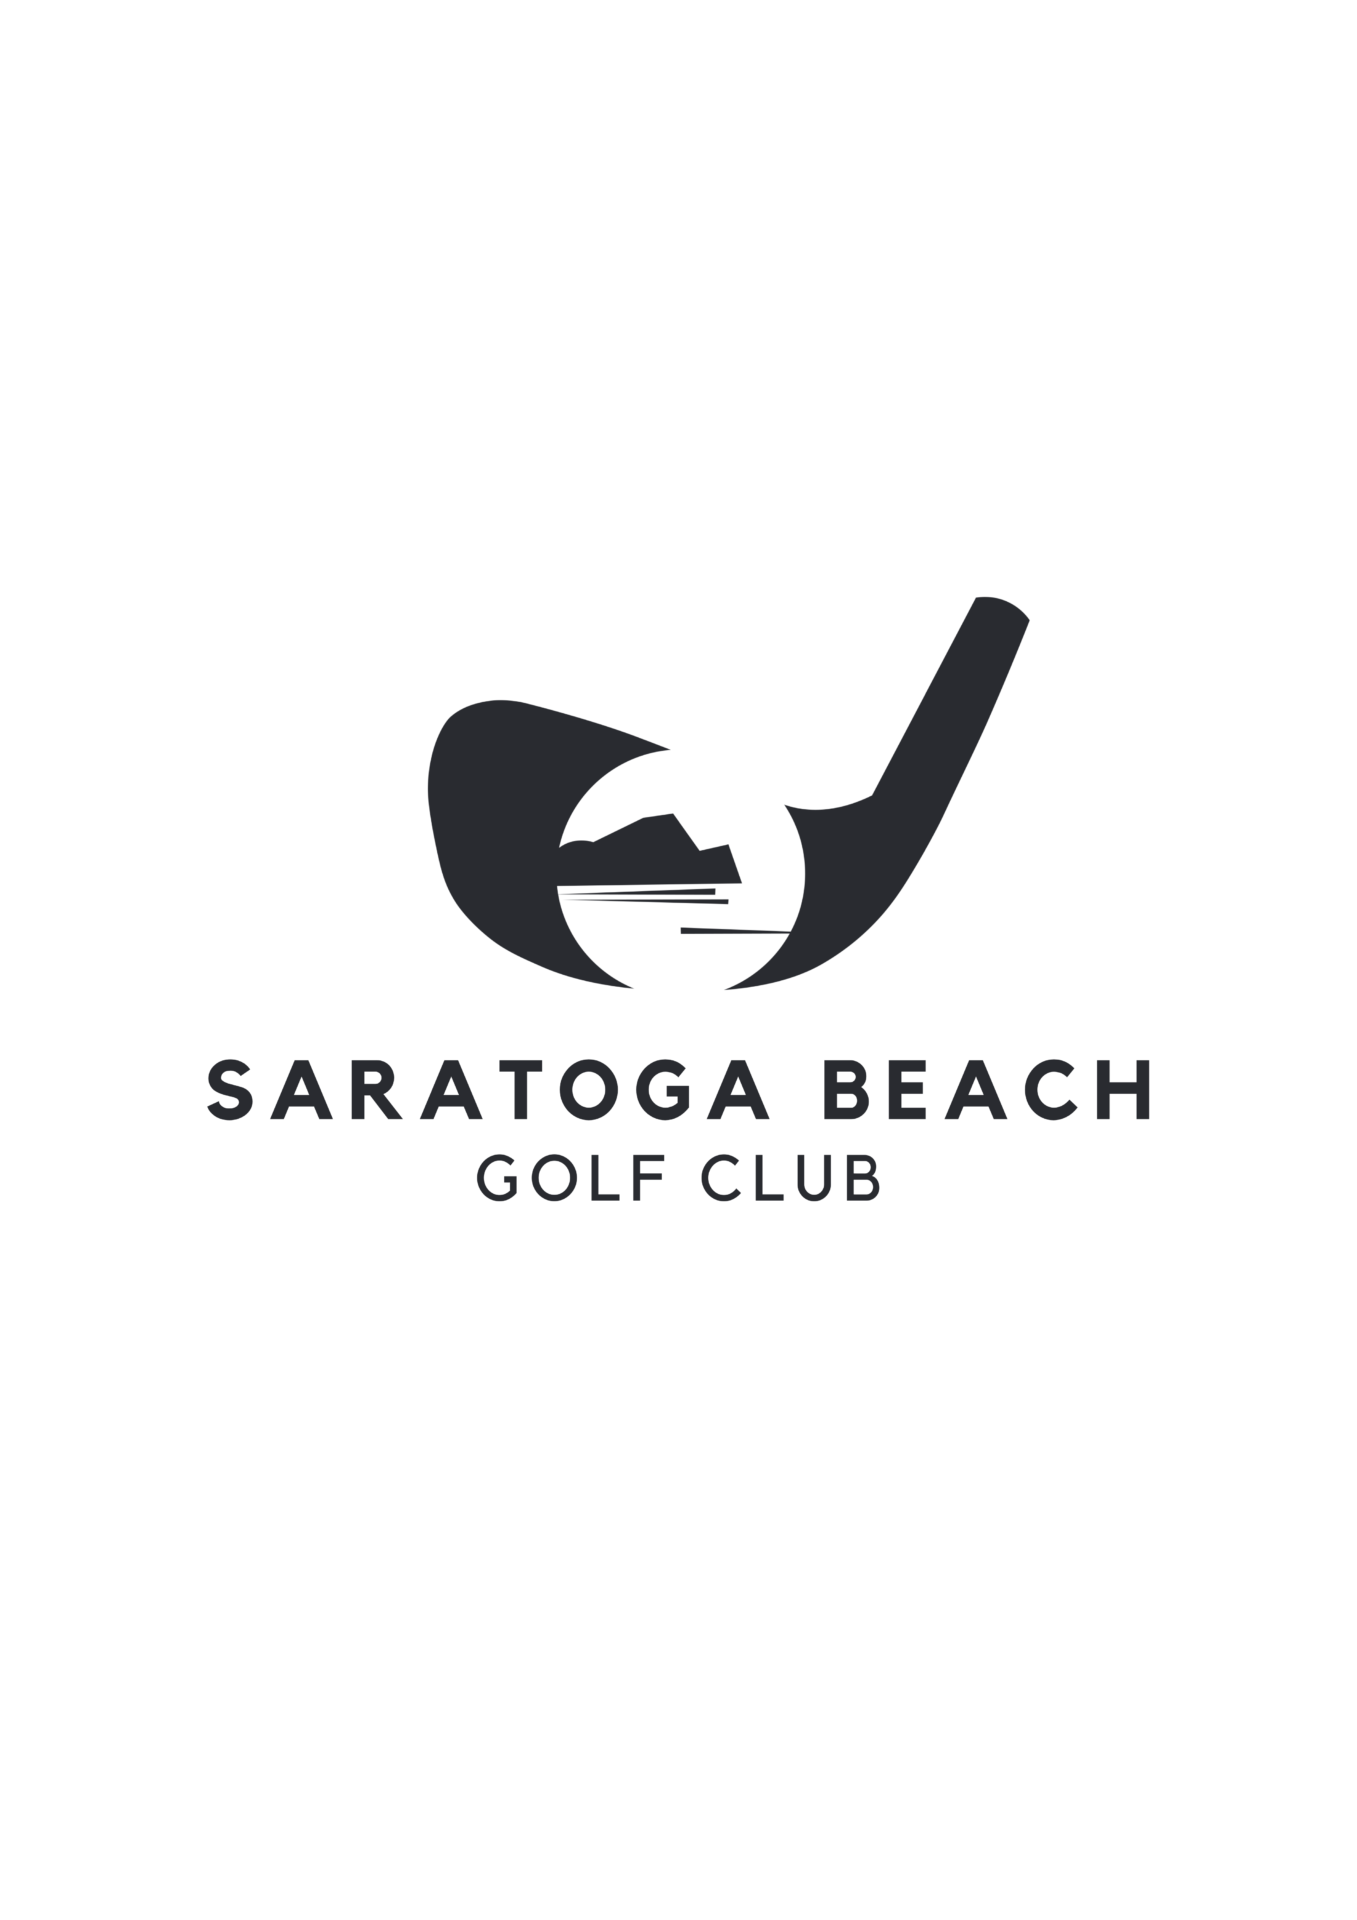 Saratoga Beach Golf Course